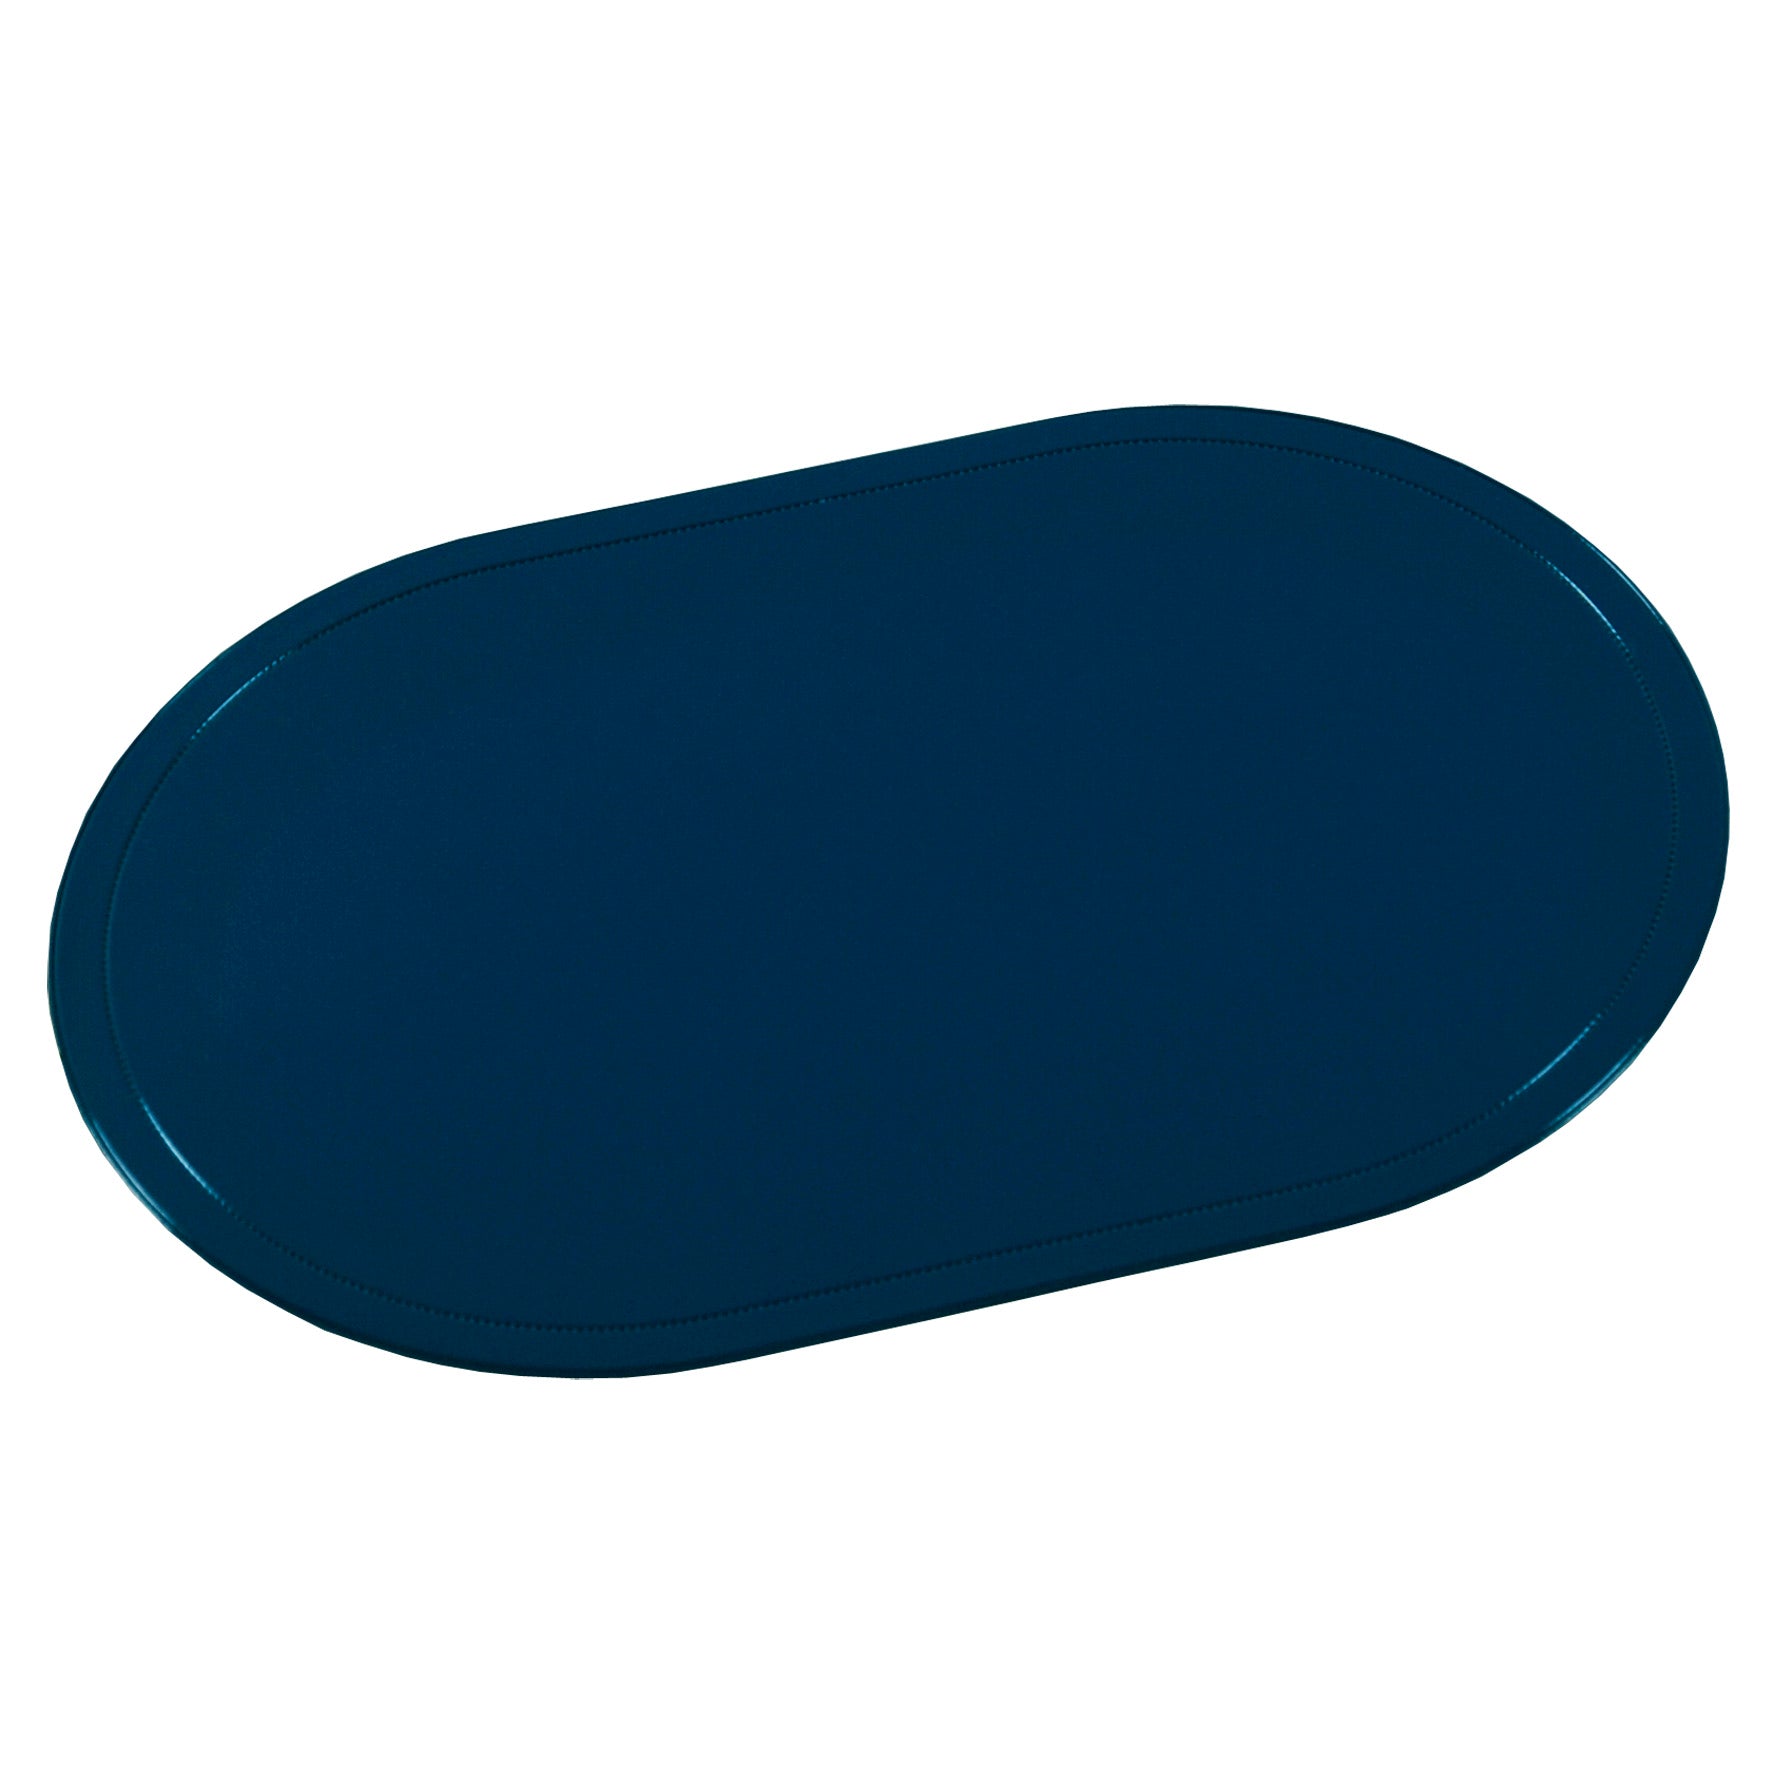 Platzset aus Kunststoff (PVC) - Kesper marine-blau Brandstore 